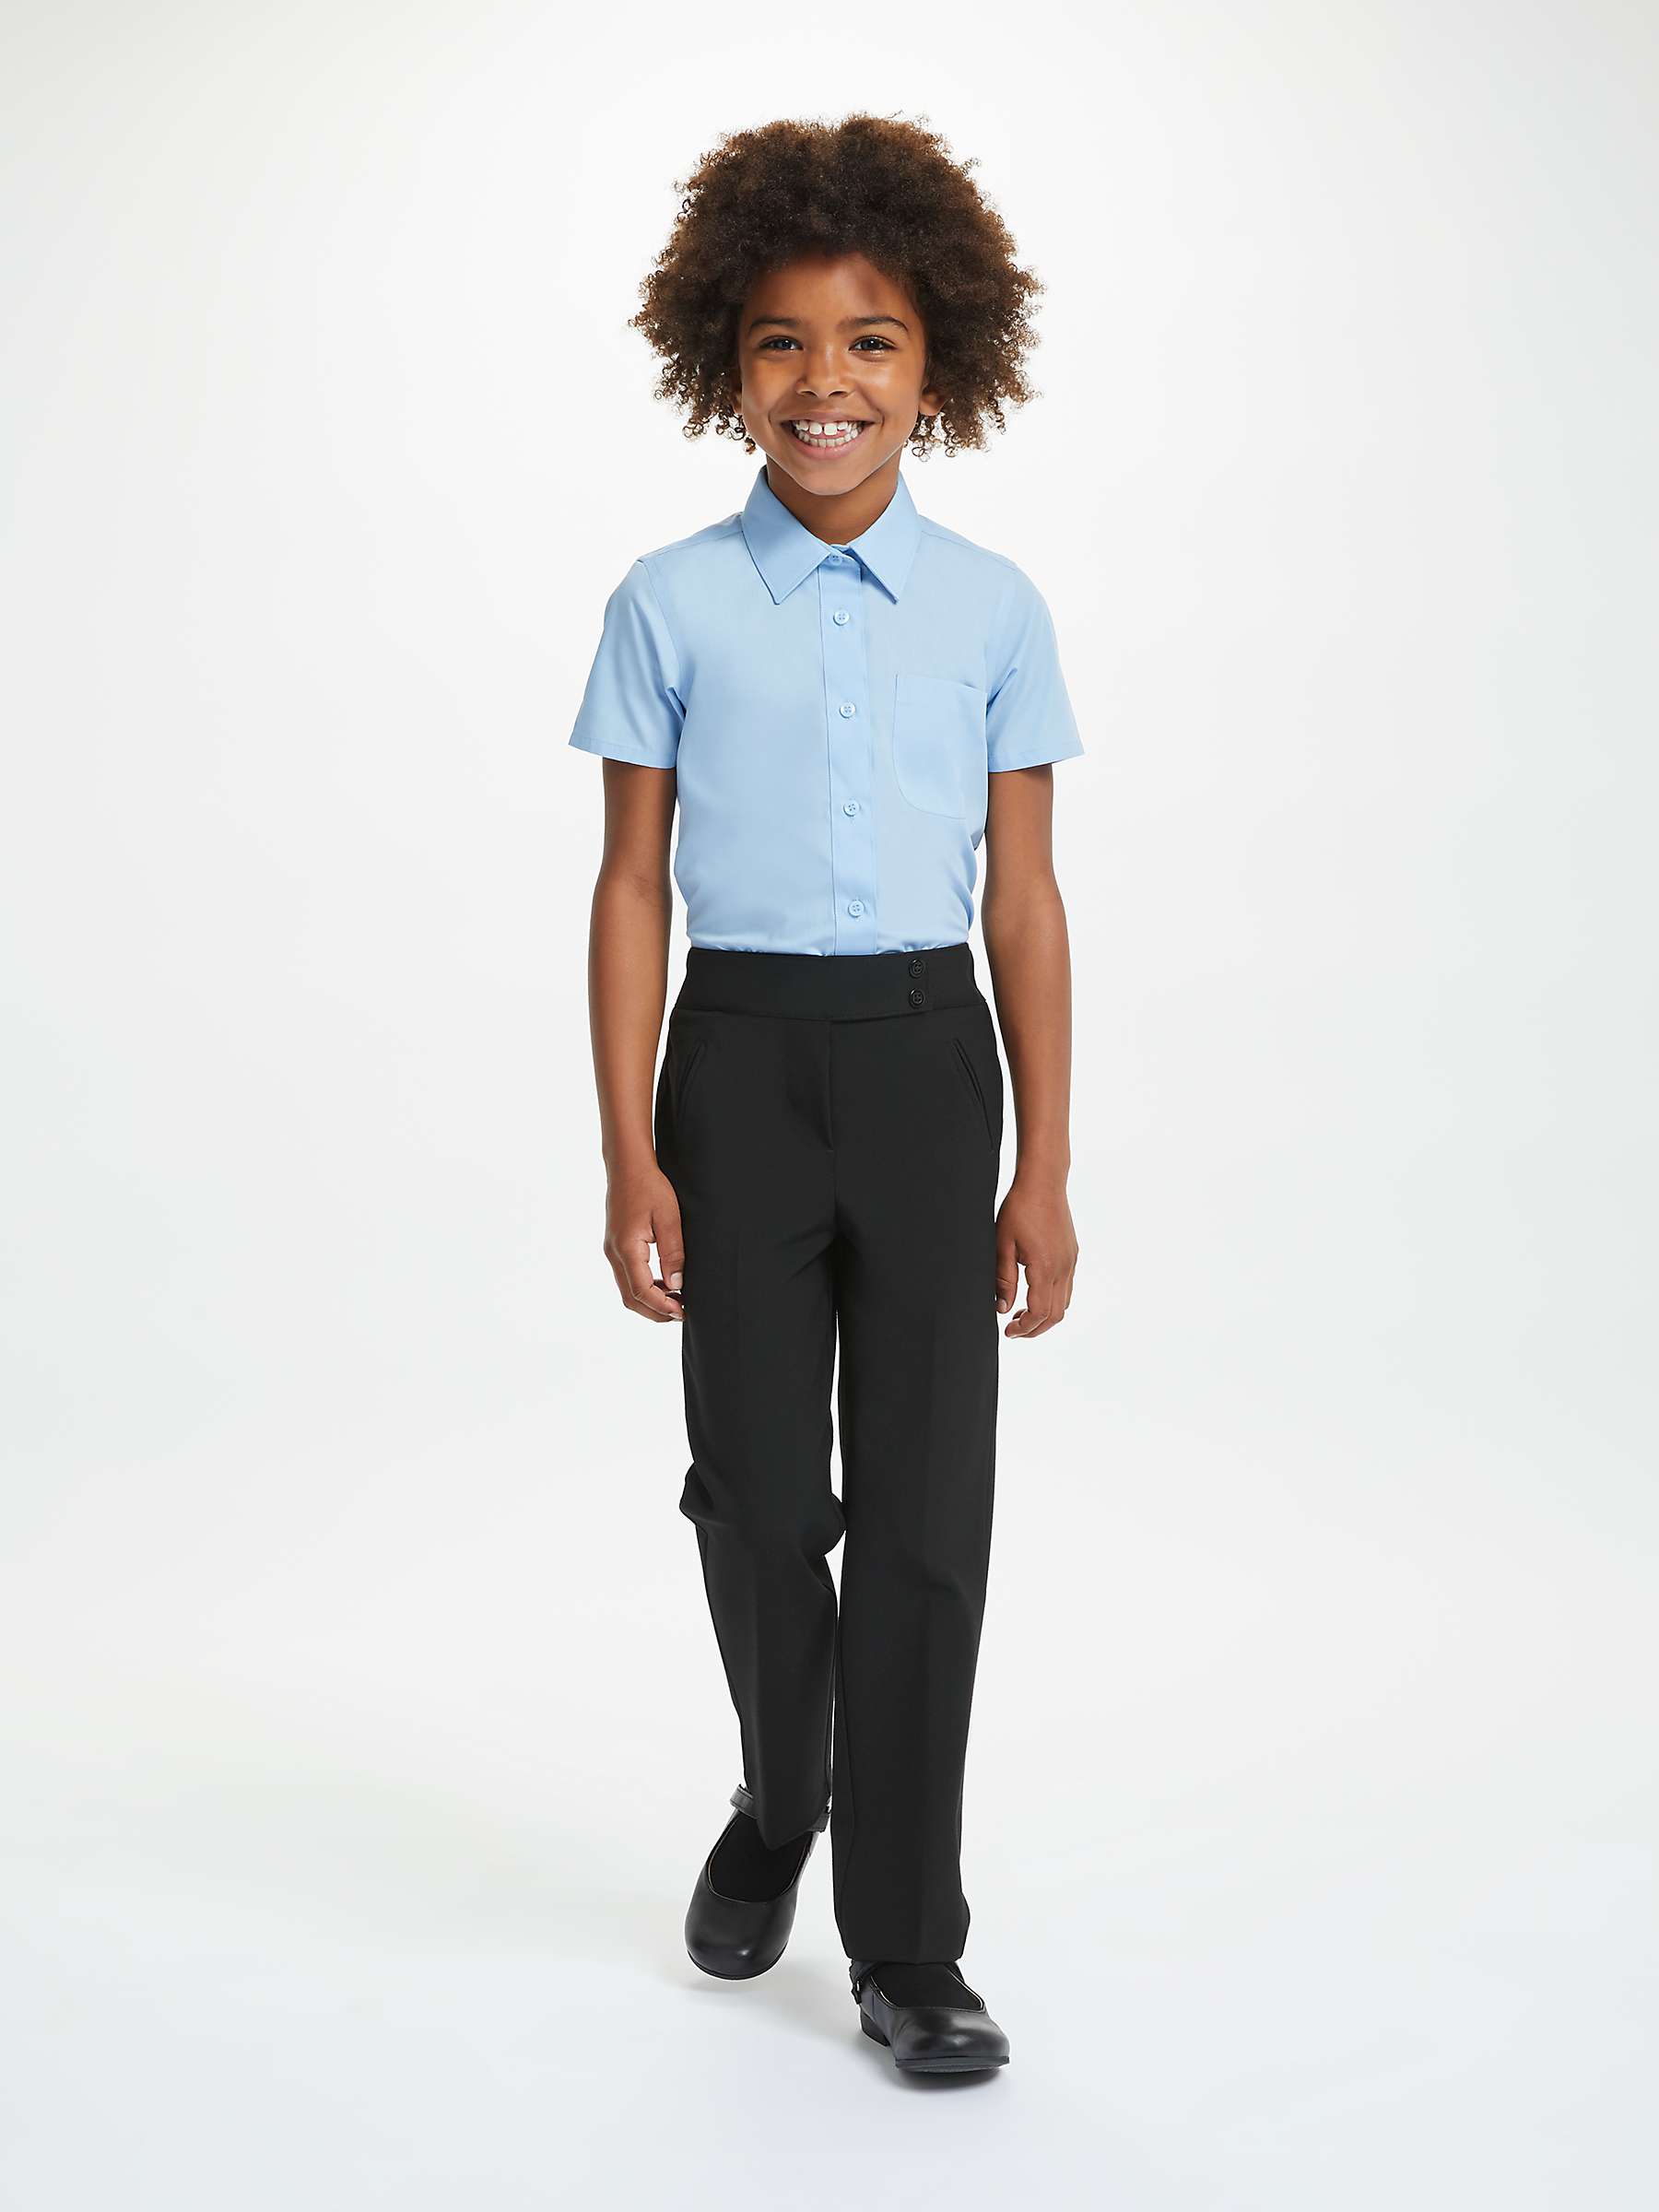 Buy John Lewis Girls' Regular Fit School Trousers, Black Online at johnlewis.com